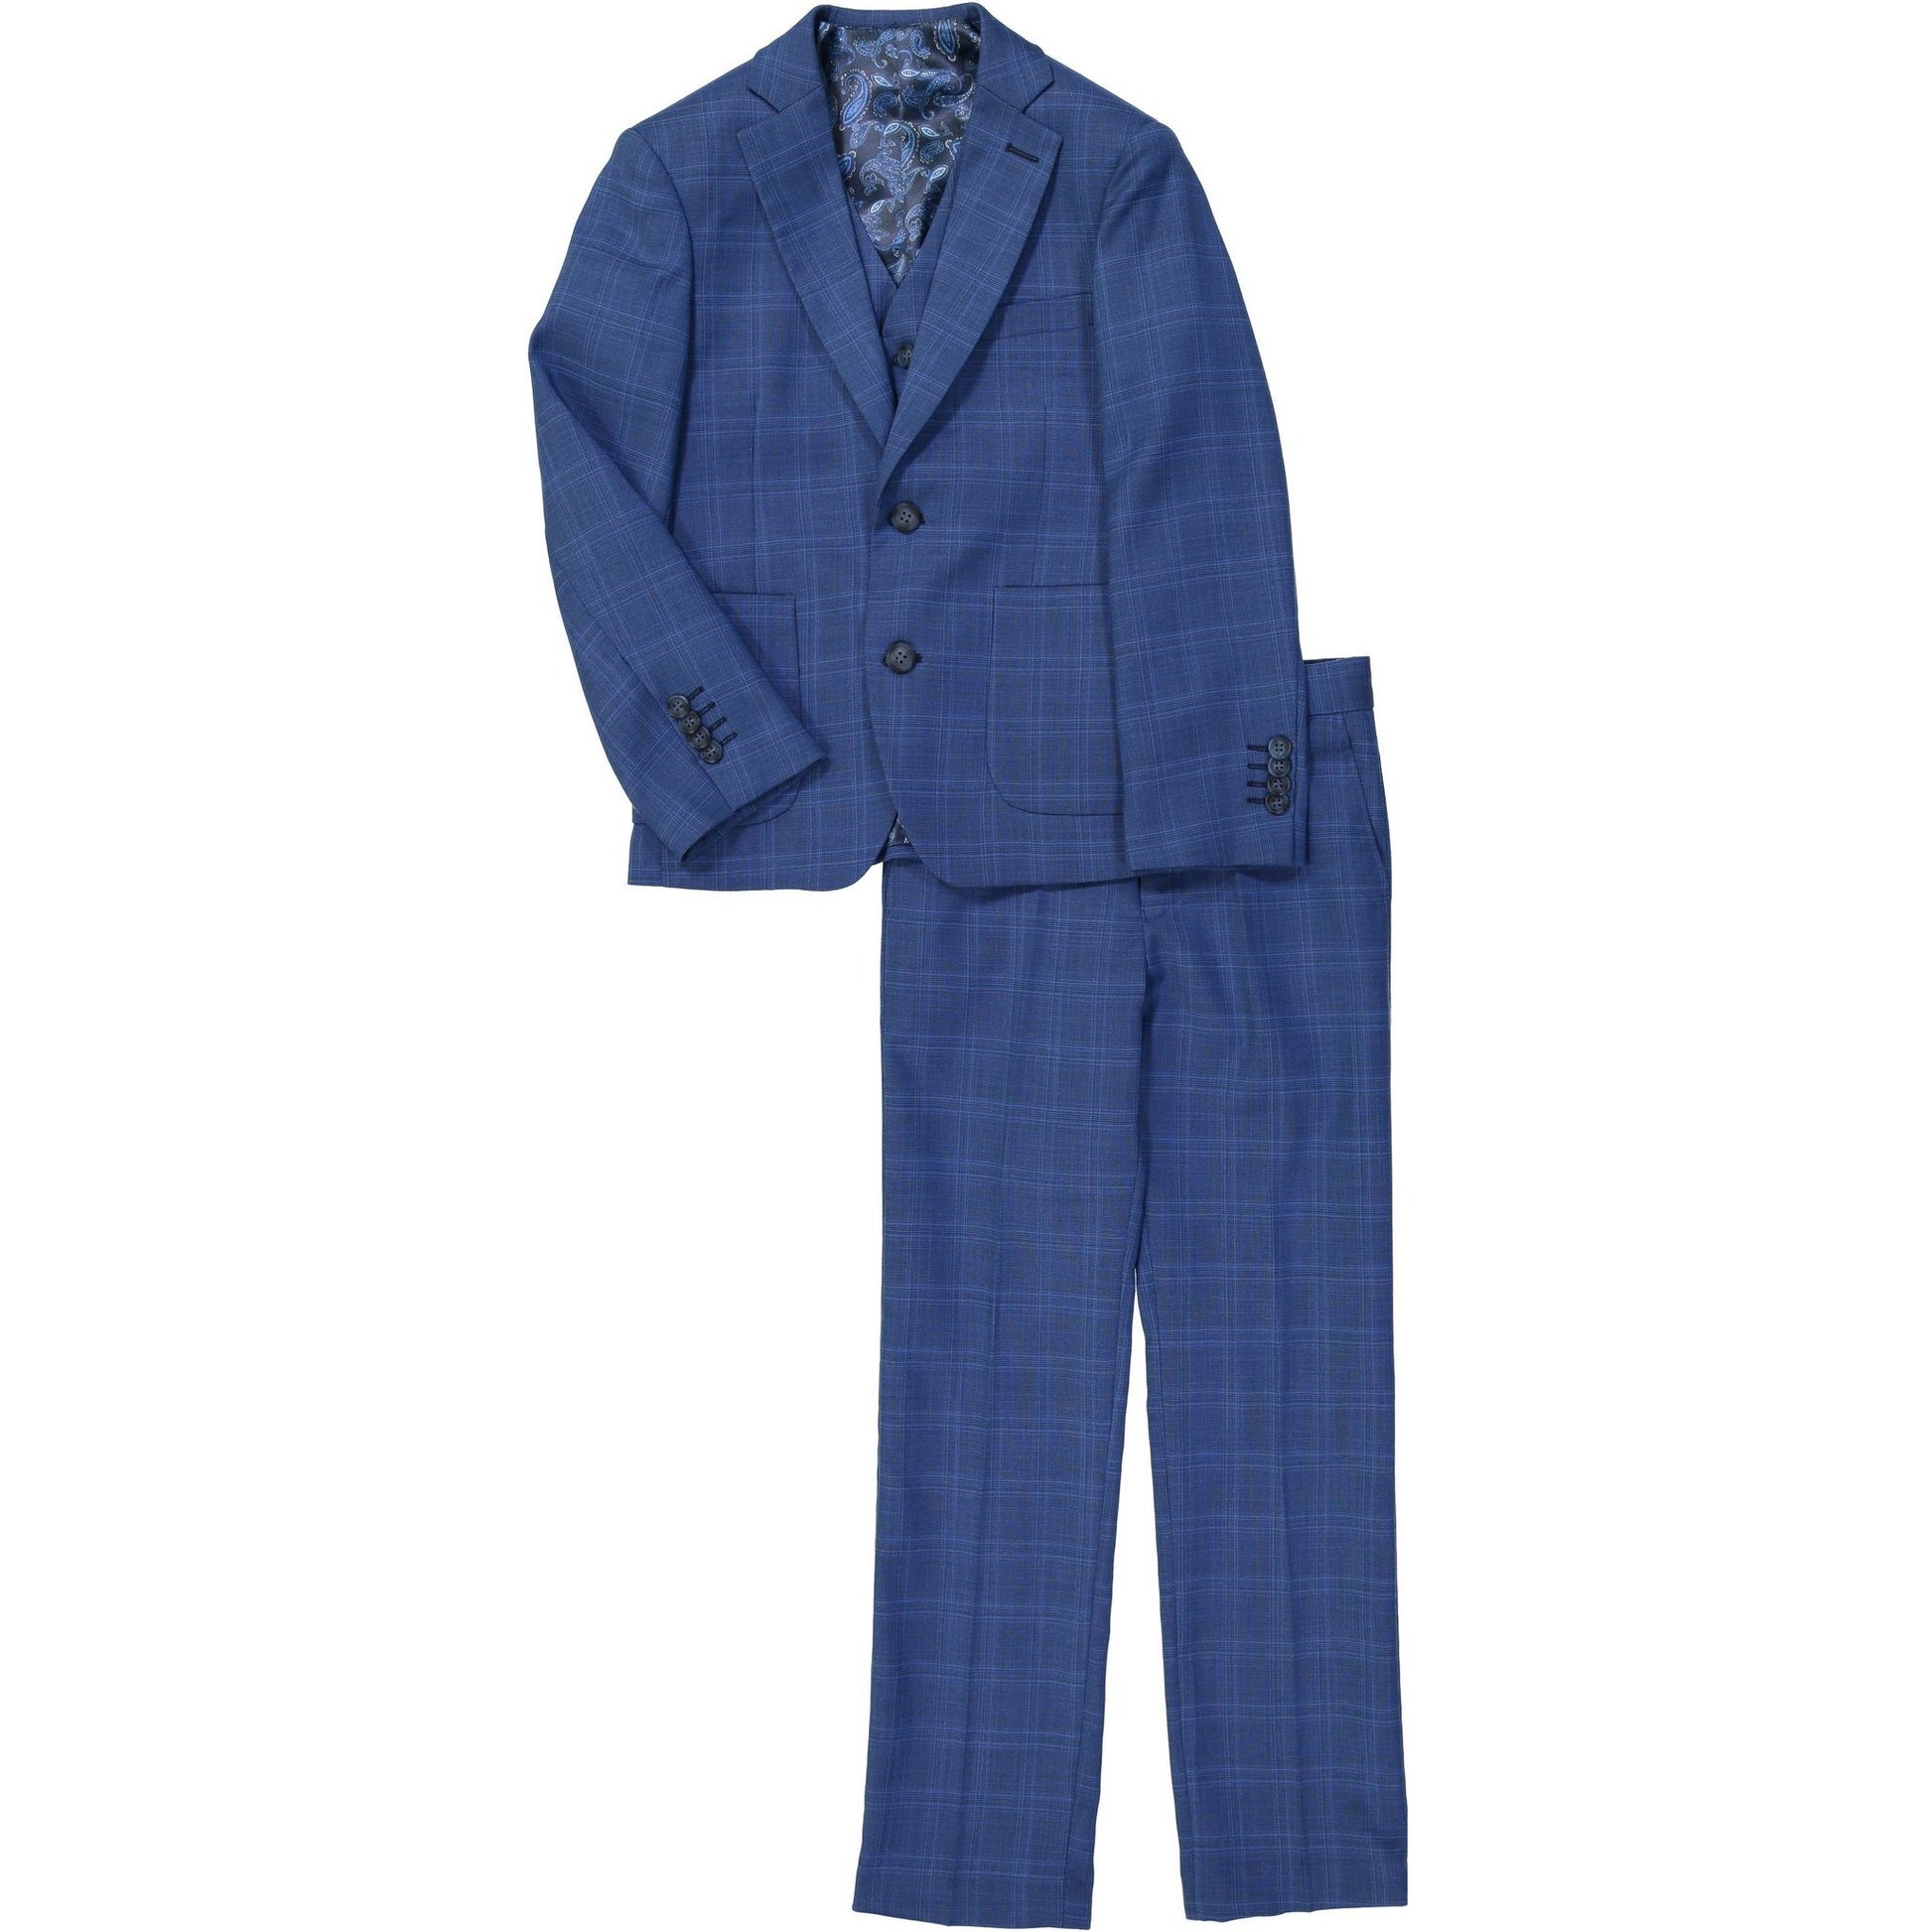 Geoffrey Beene 3 Piece Slim Fit Blue Suit ST8204 Suits (Boys) Geoffrey Beene 